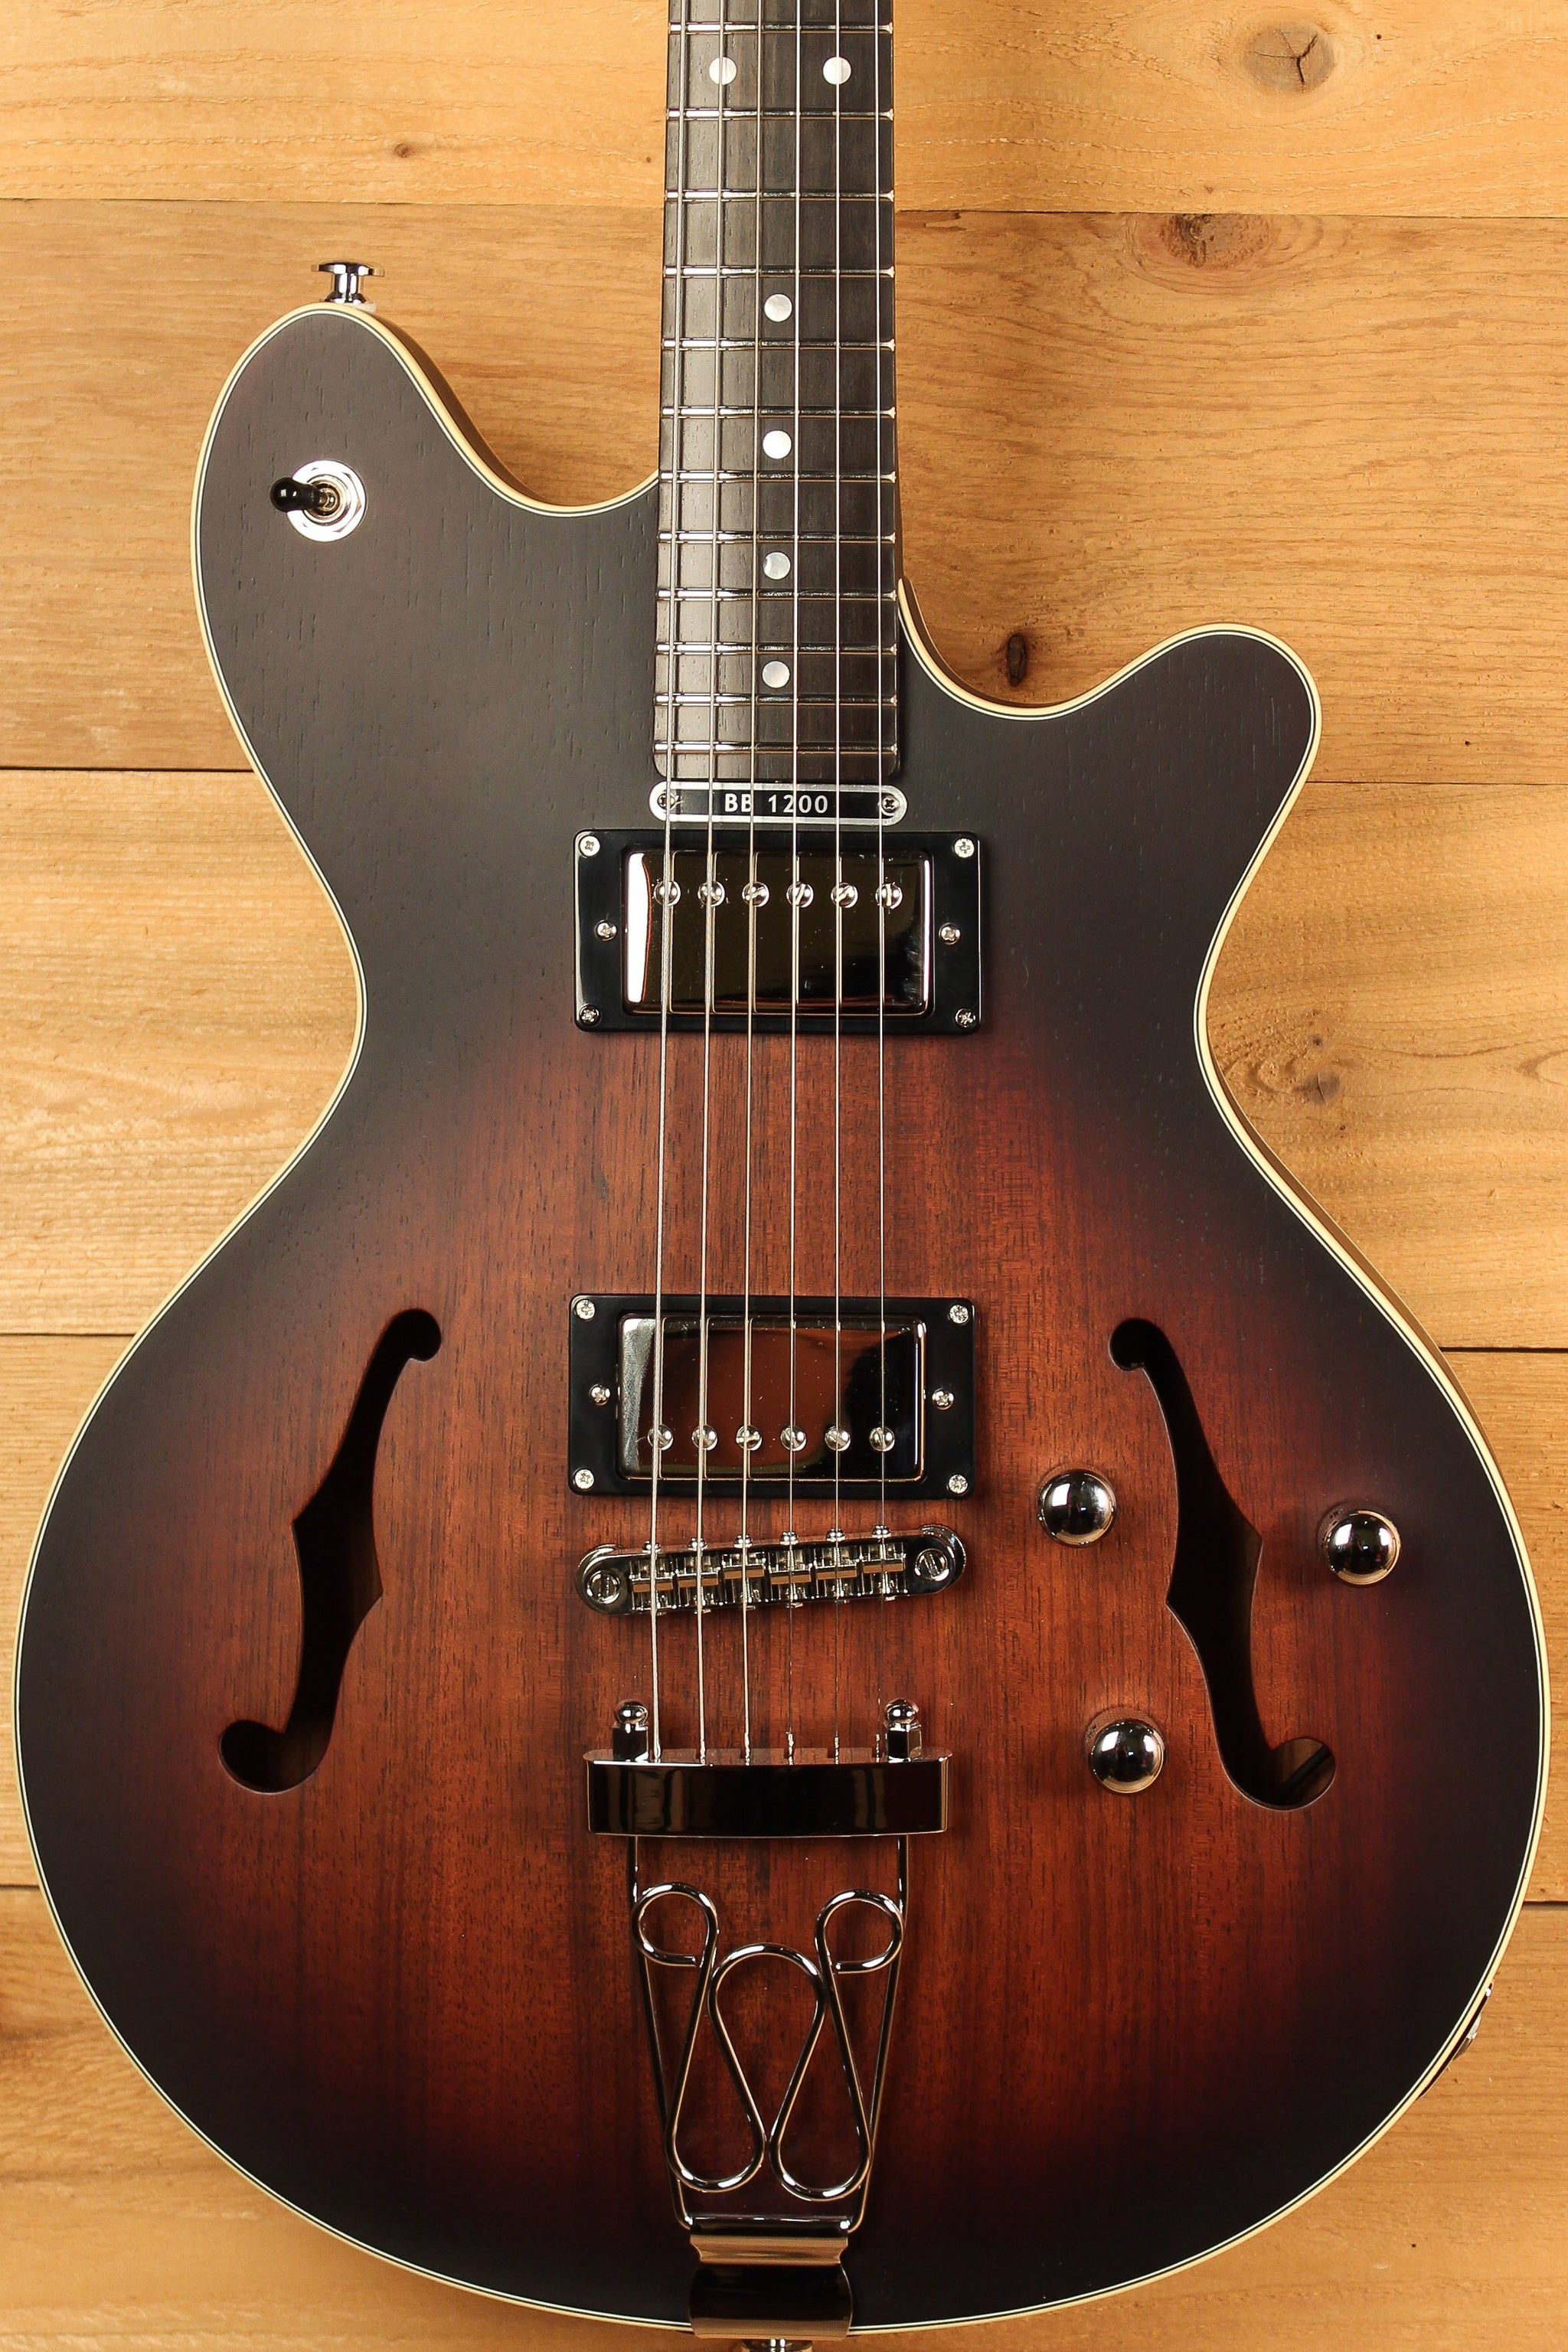 Maton BB1200 JH Electric Guitar w/ Bad Boy Pickups ID-13602 - Artisan Guitars